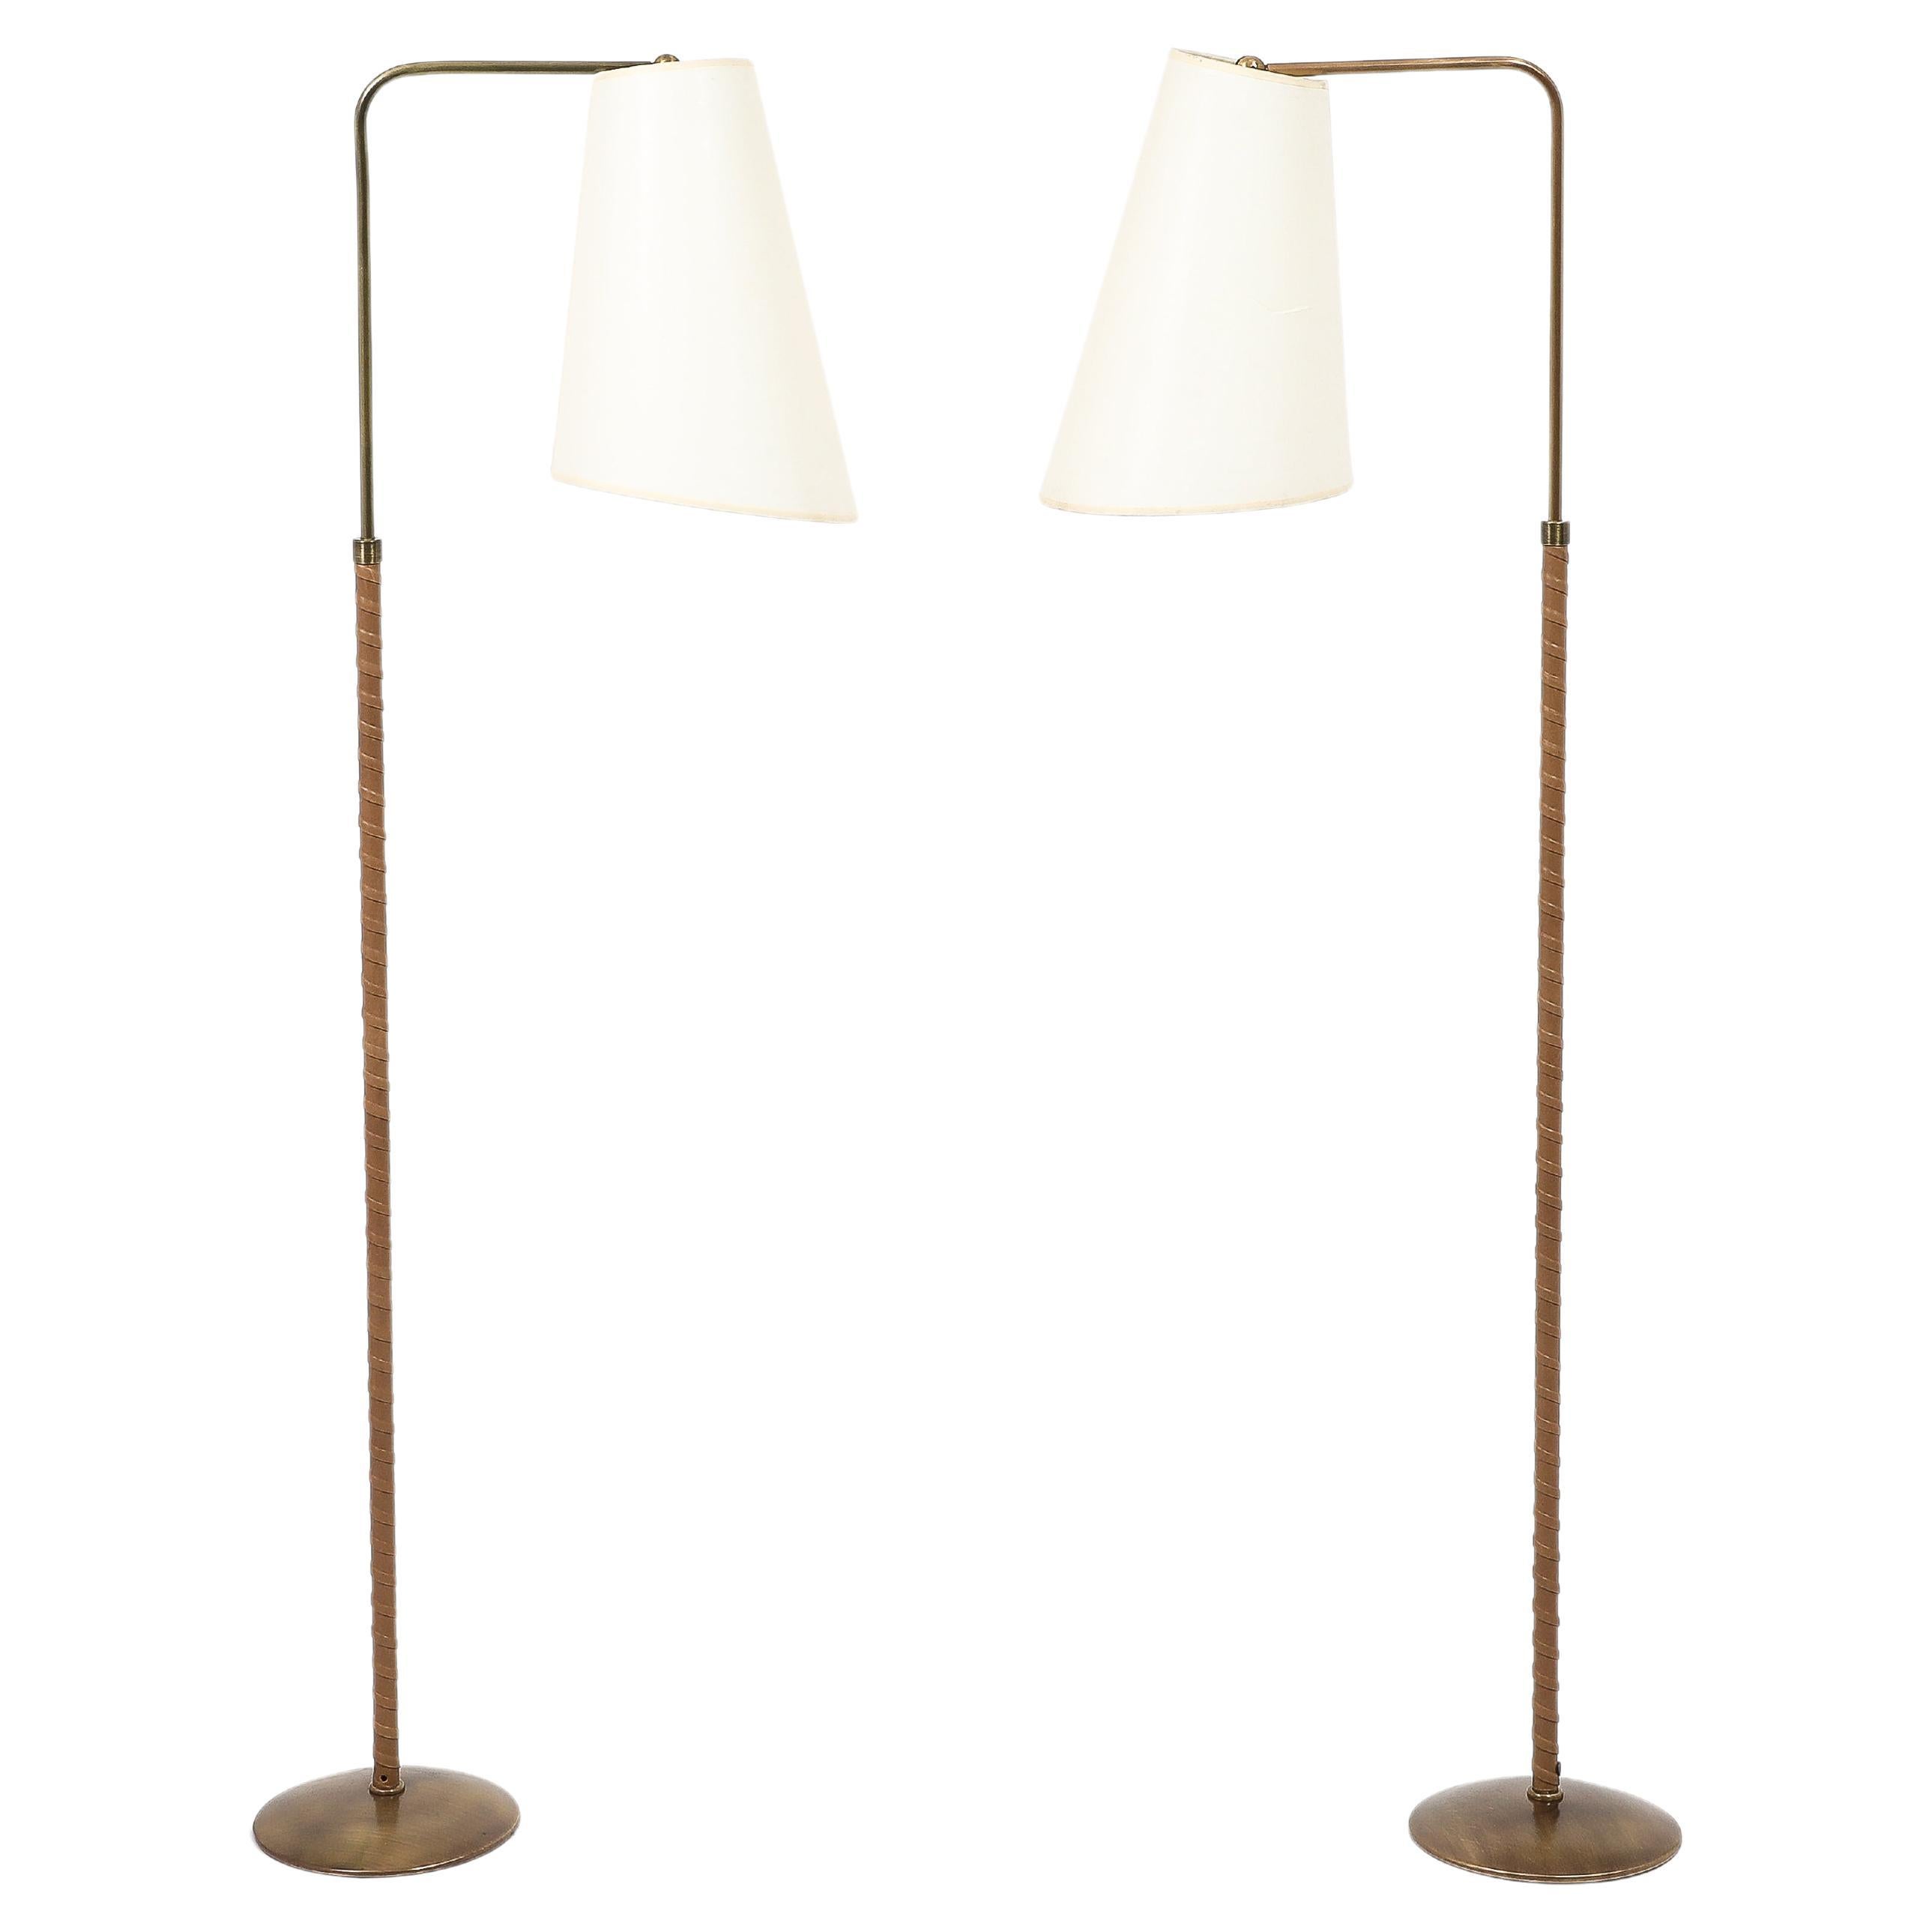 Brass & Tan Leather Metalarte Floor Lamps, Spain 1960's For Sale